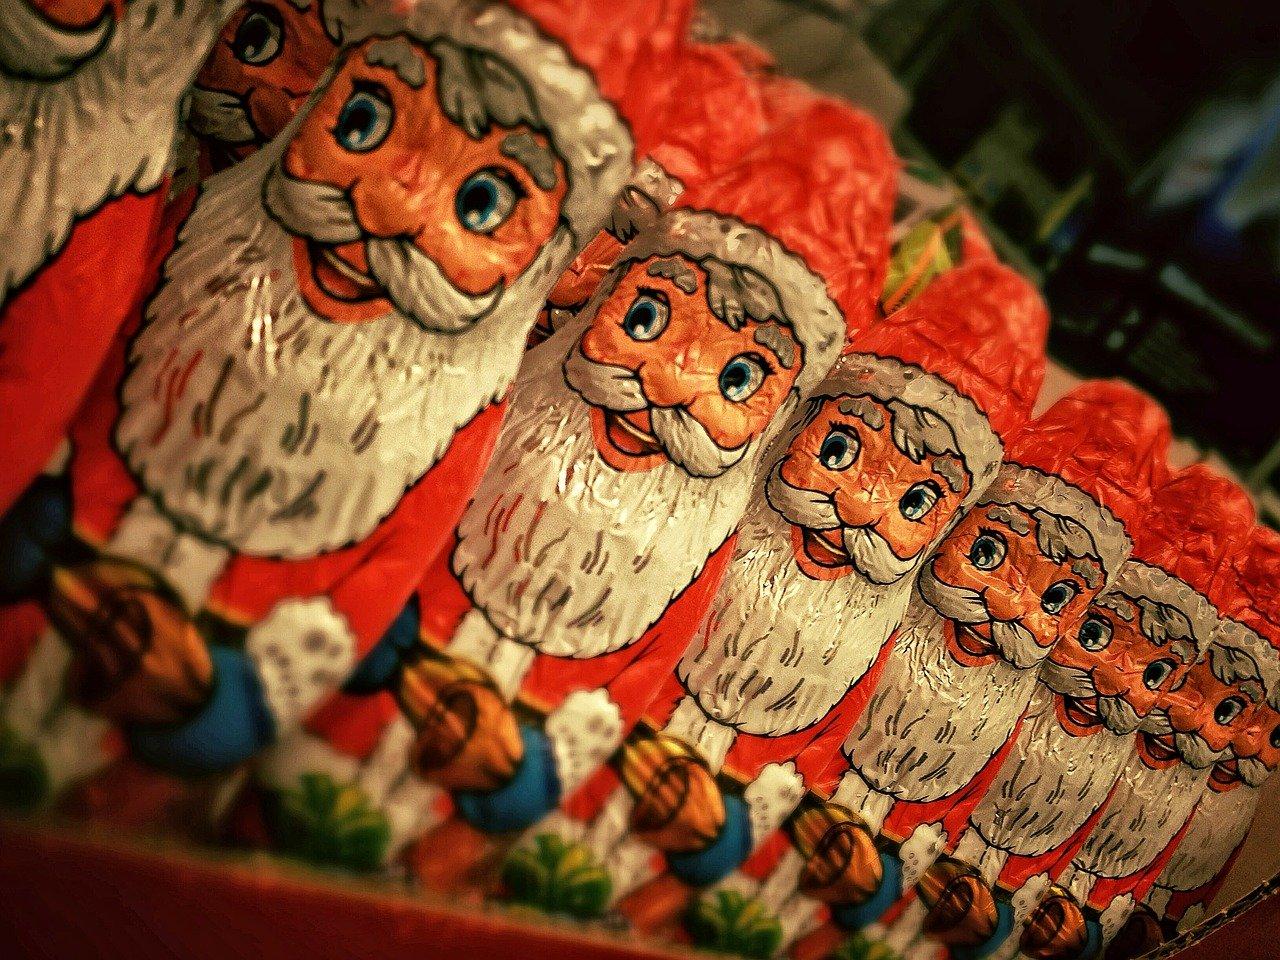 Santa, Christmas decorations stolen from Catholic school in Guam